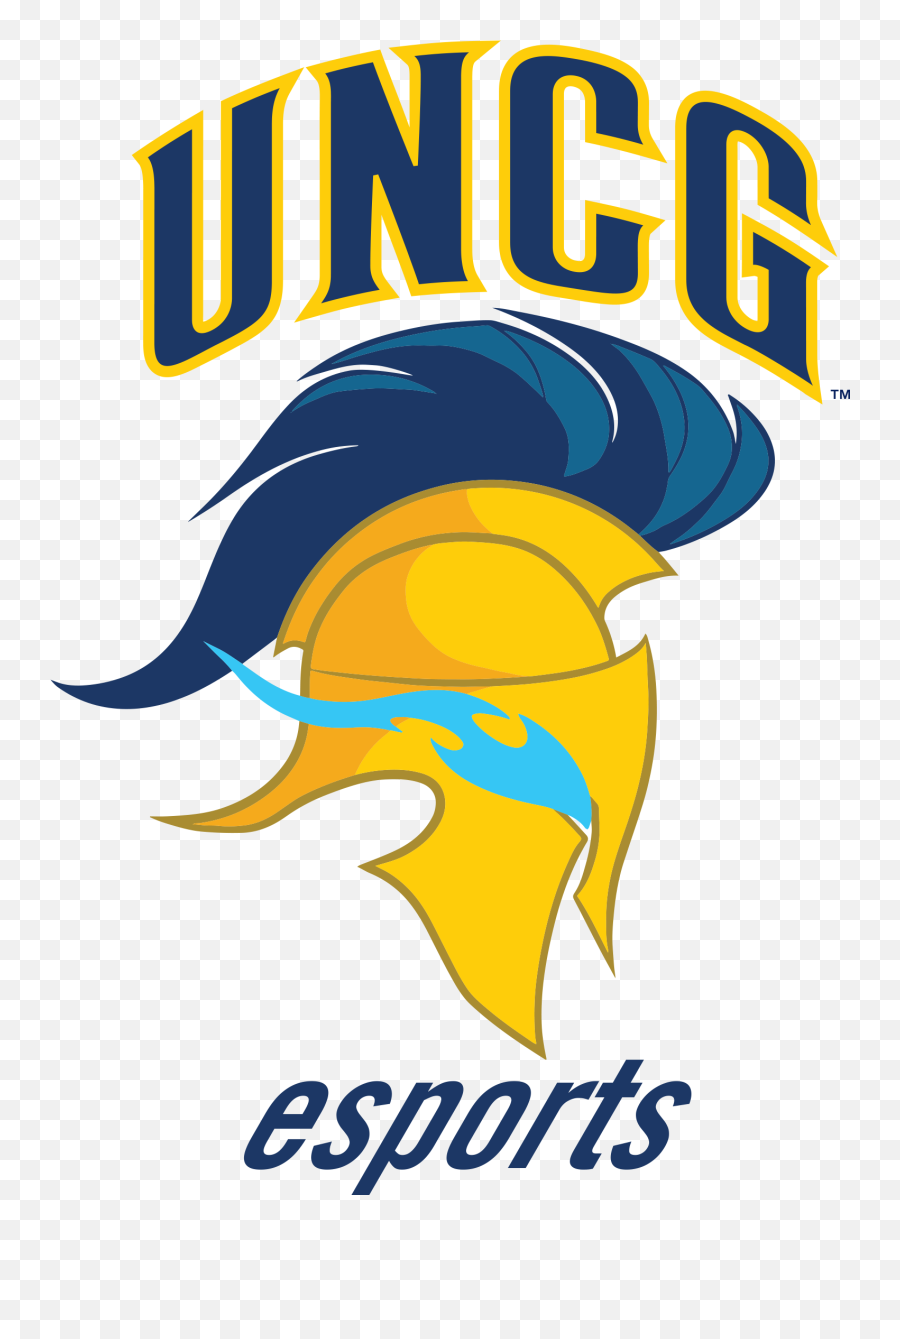 Uncg Esports Logo - Illustration Png,Esports Logo